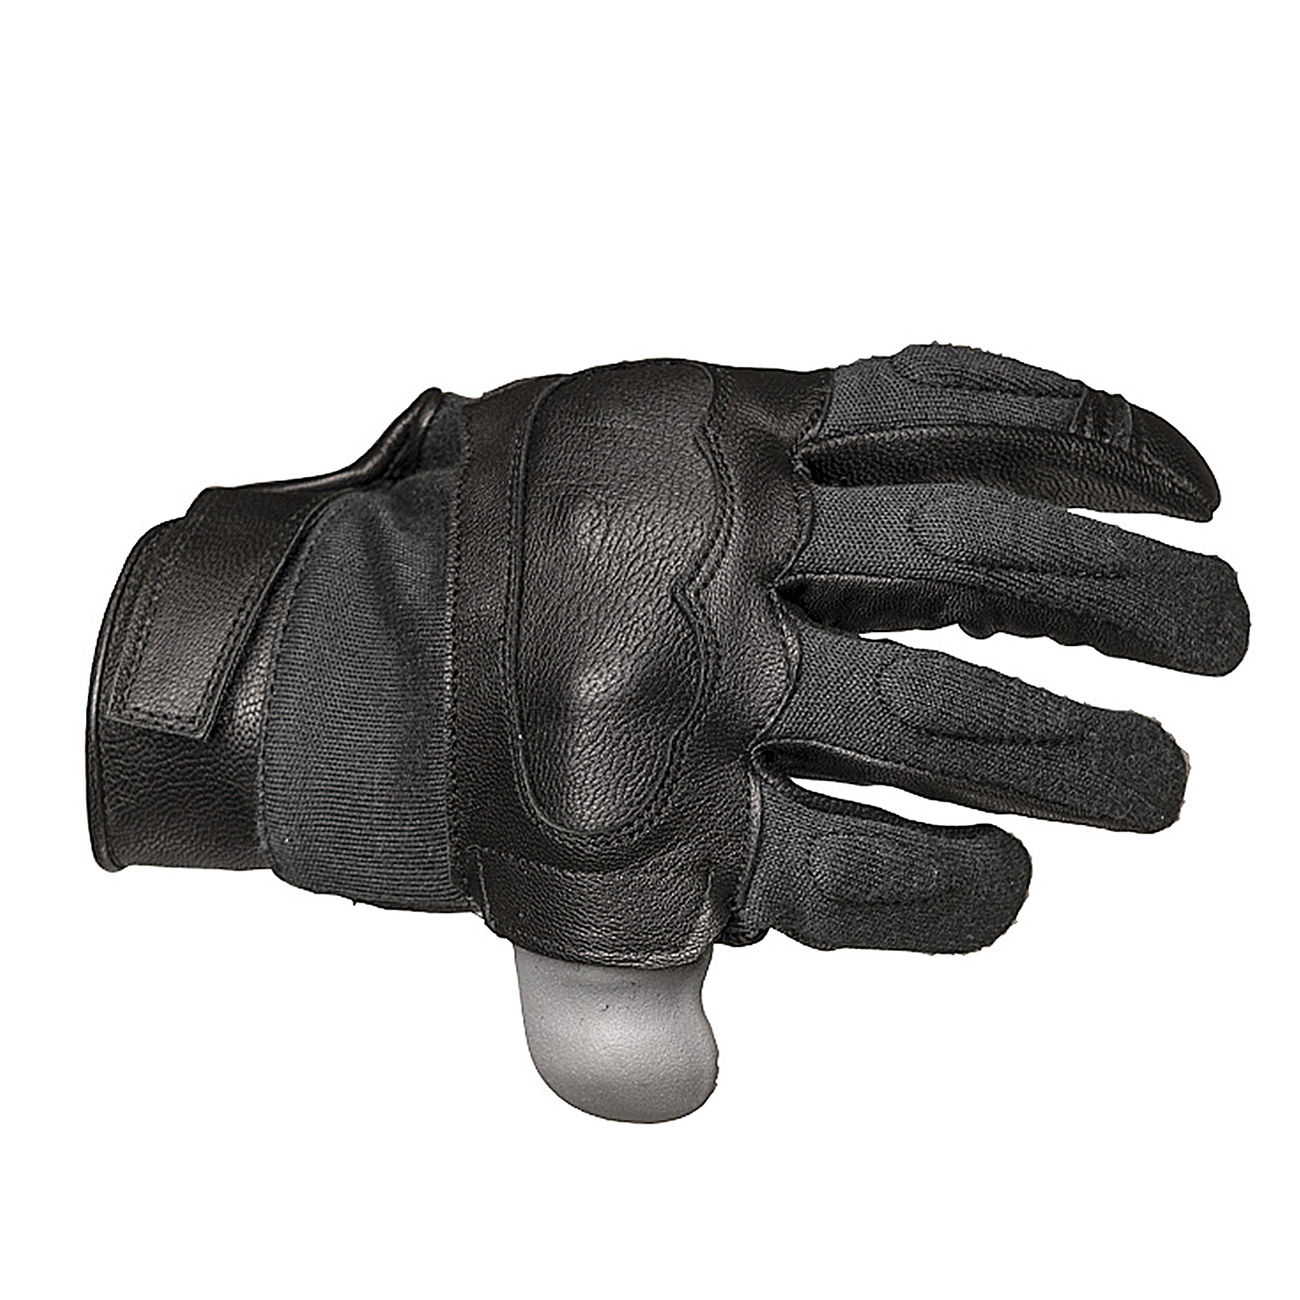 Mil-Tec Handschuhe Tactical Leder/Kevlar schwarz Bild 1